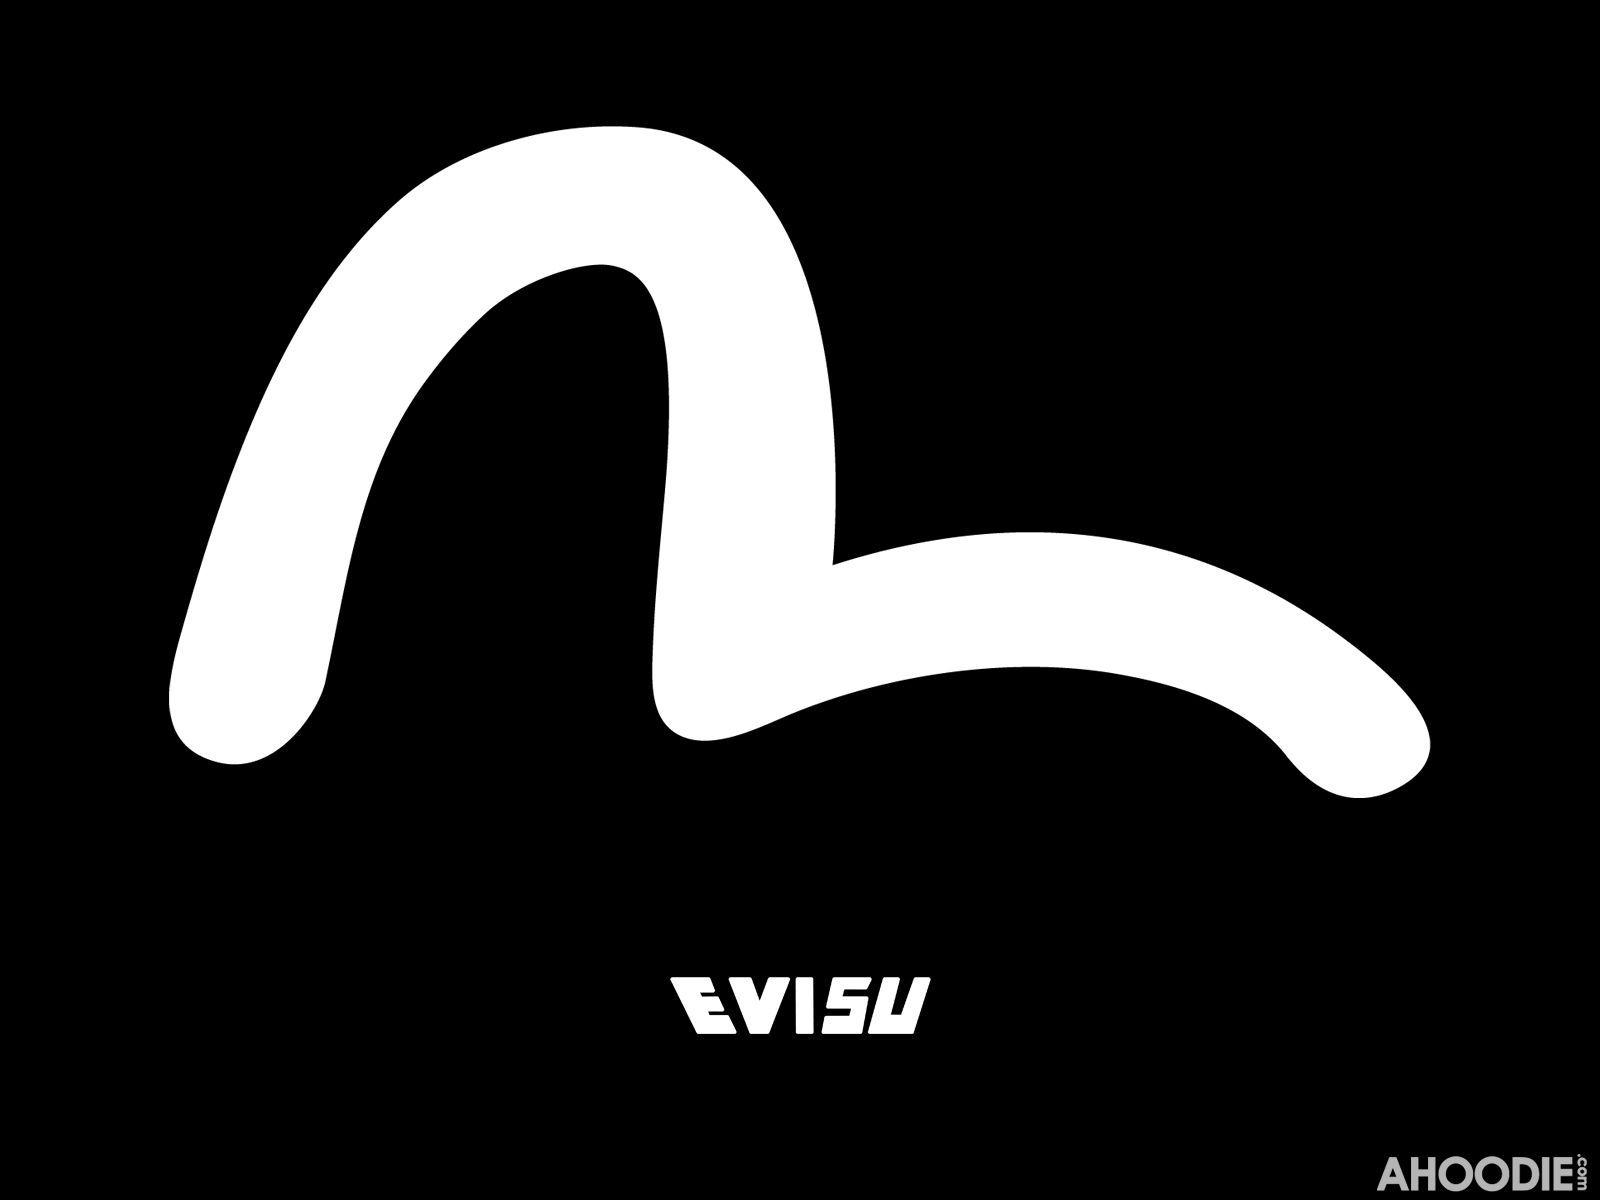 Evisu Logo - LOVE Evisu. Makeup and Fashion. Evisu, Logos, Art